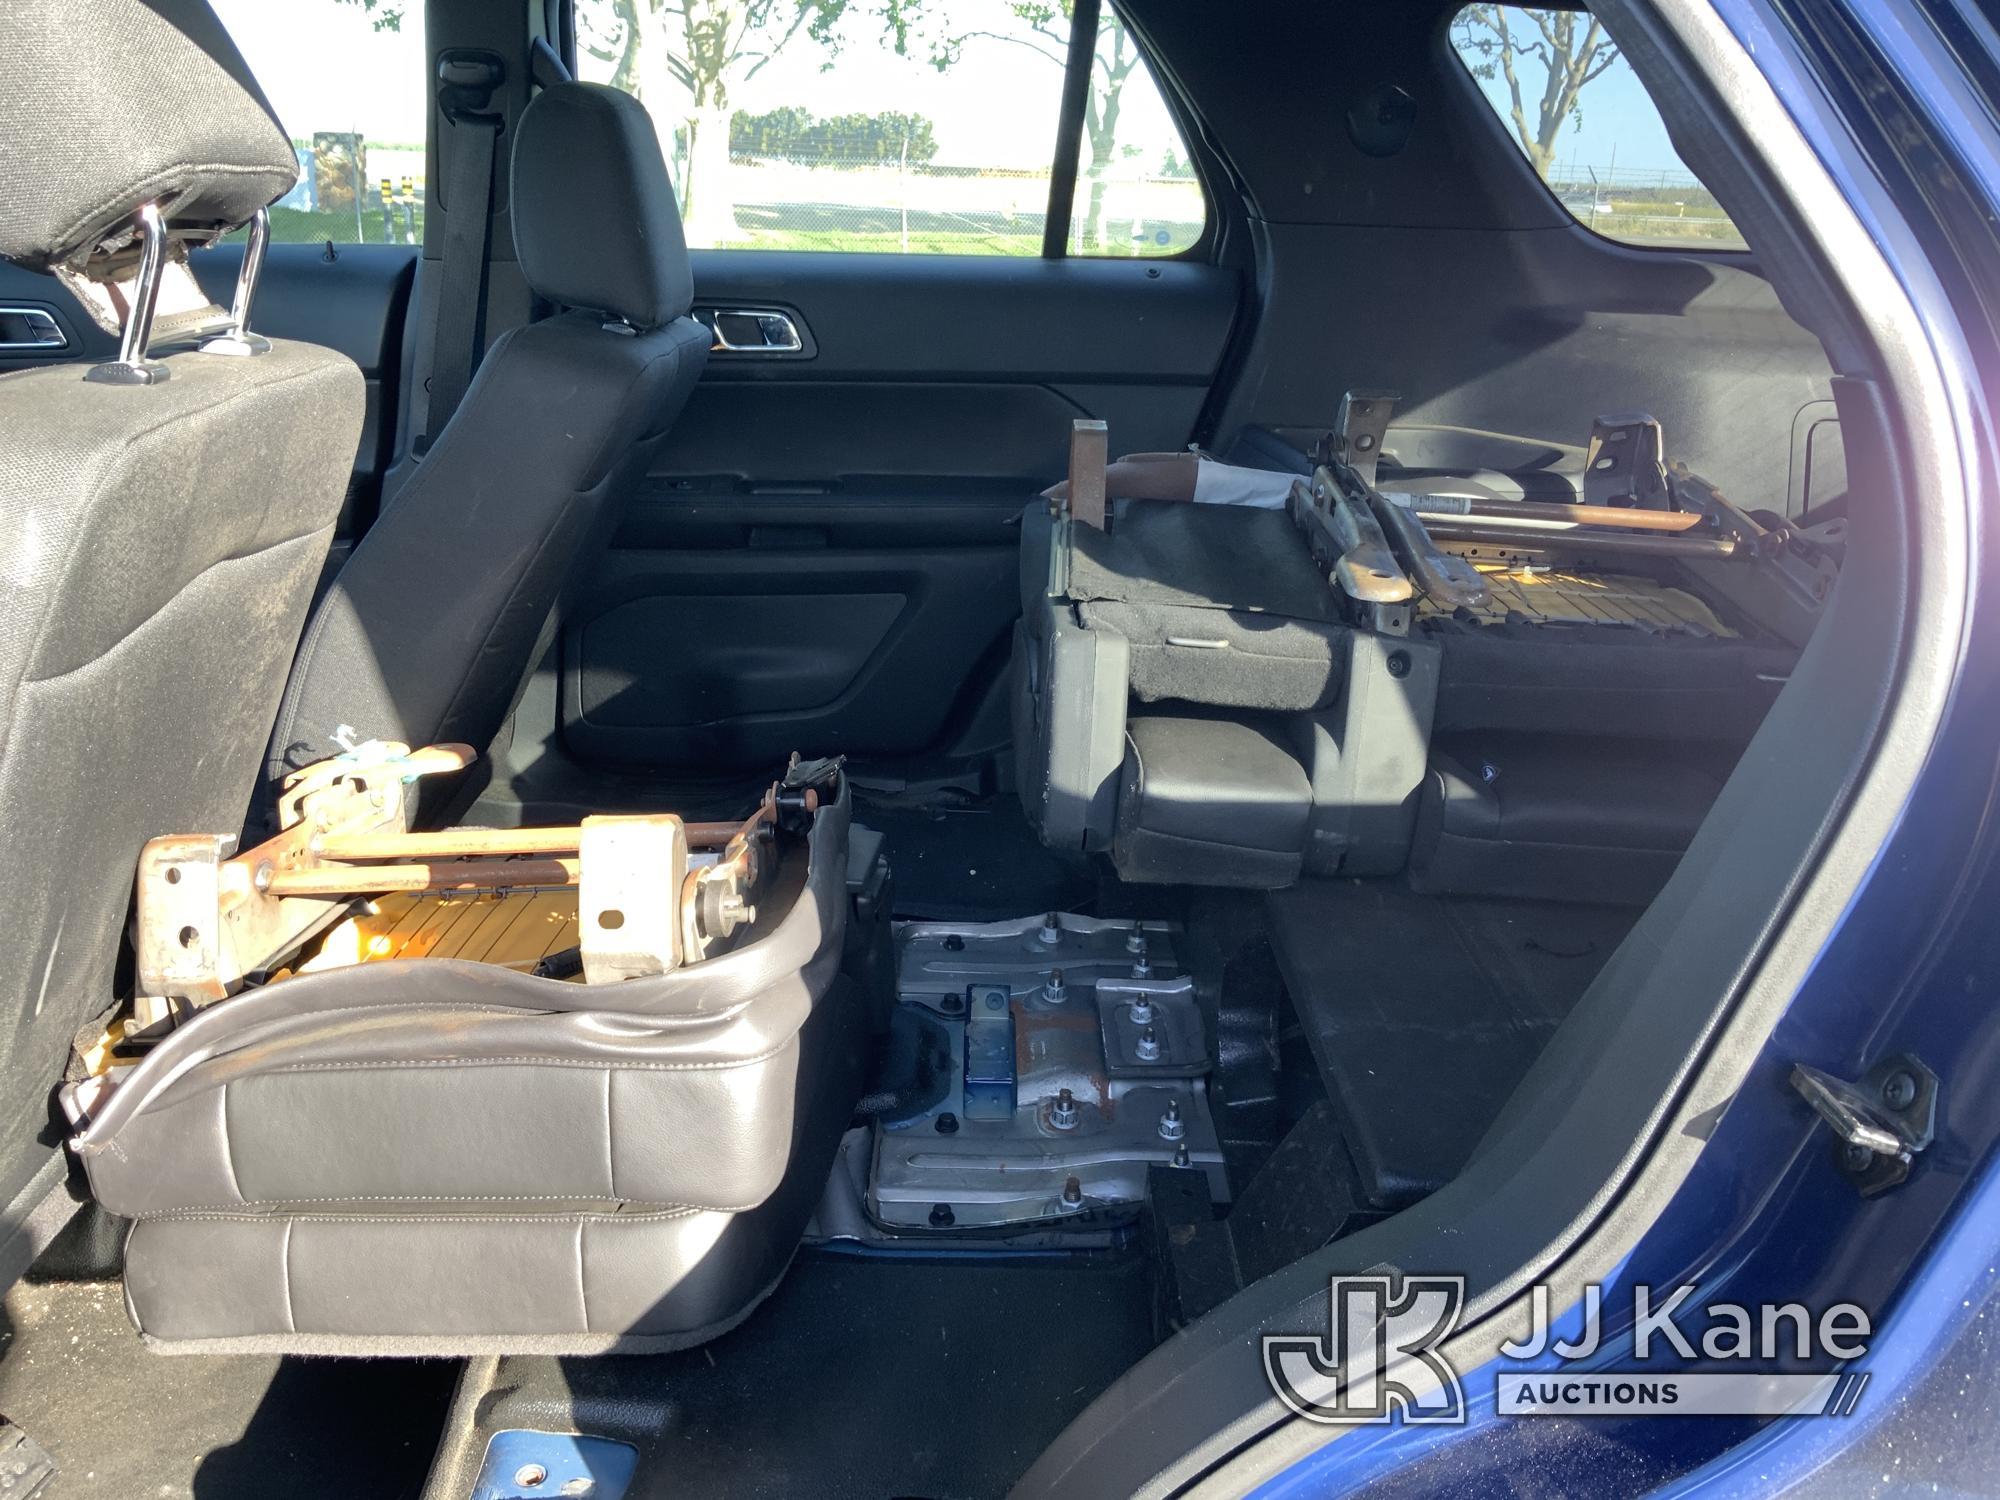 (Dixon, CA) 2018 Ford Explorer AWD Police Interceptor 4-Door Sport Utility Vehicle Runs & Moves) (Ai